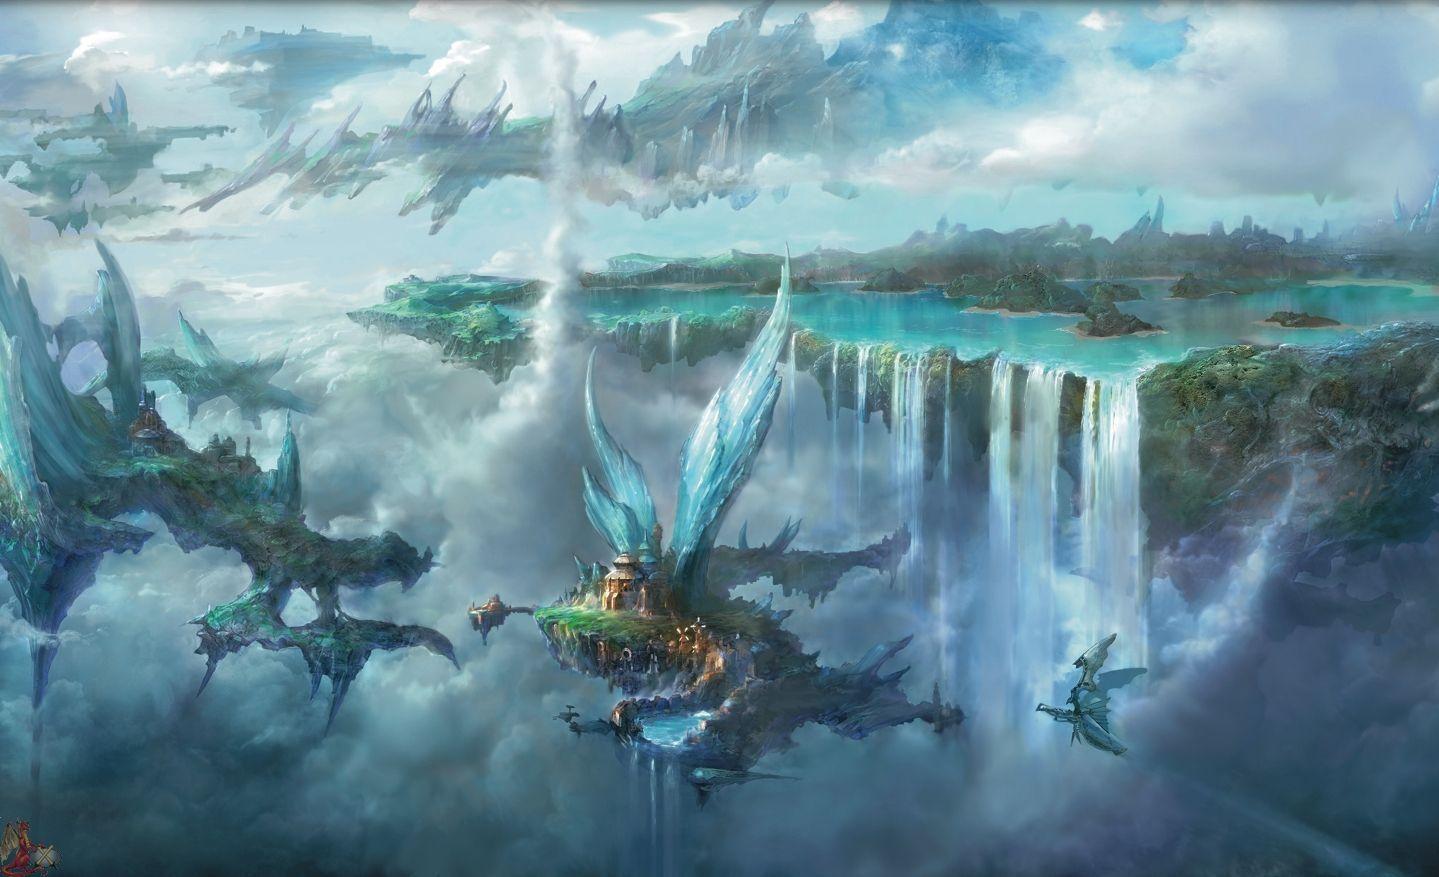 Final Fantasy HD Wallpaper